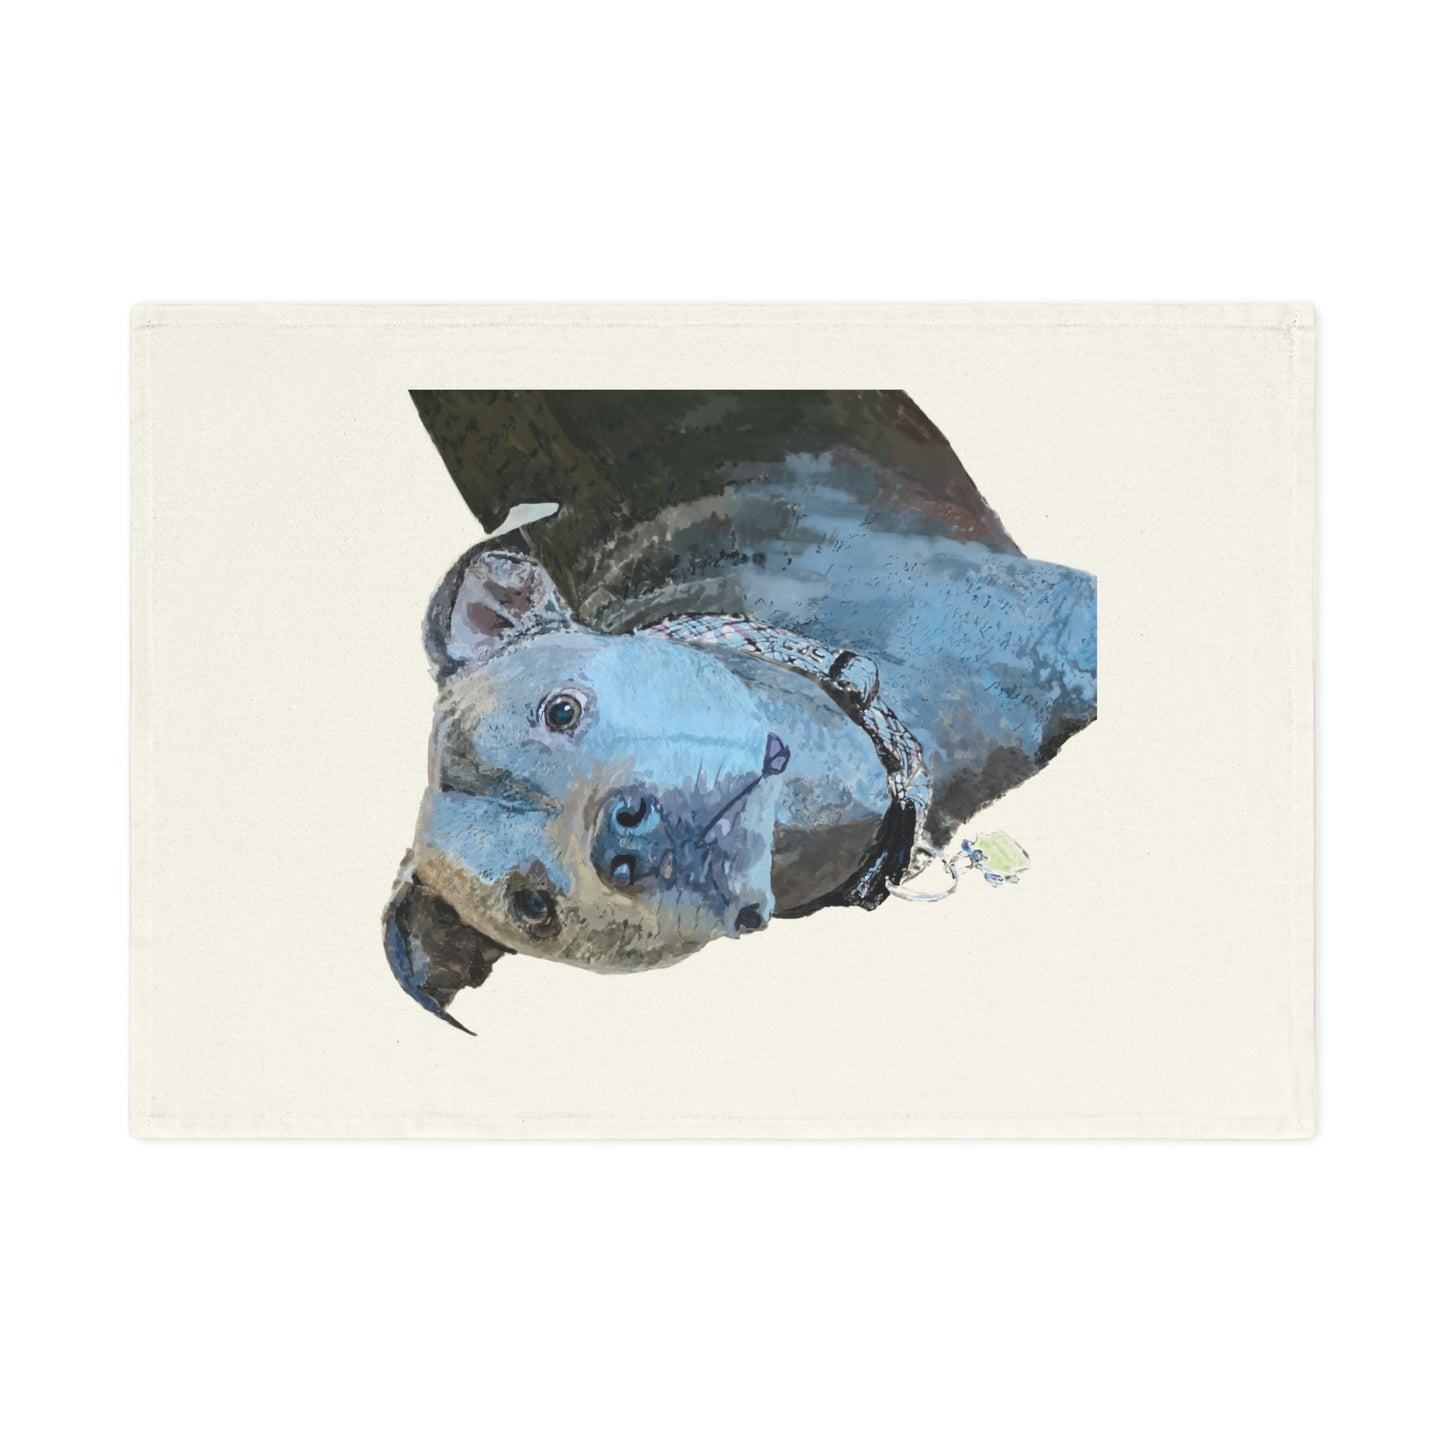 “Diesel” Pit Bull Cotton Hand Towel - Blue Cava